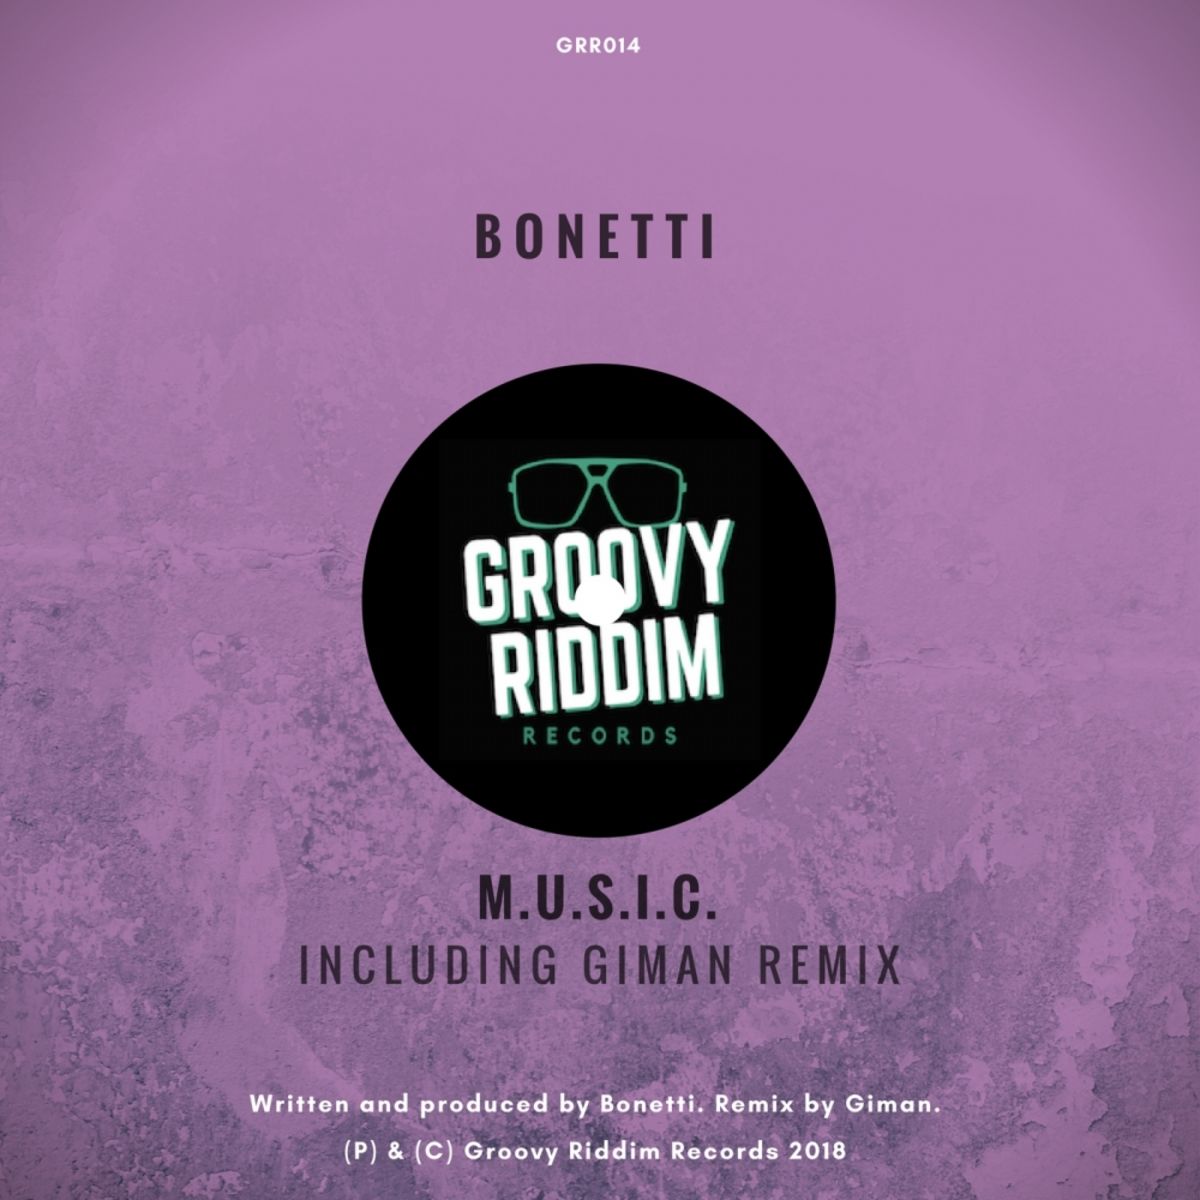 Bonetti - M.U.S.I.C. / Groovy Riddim Records